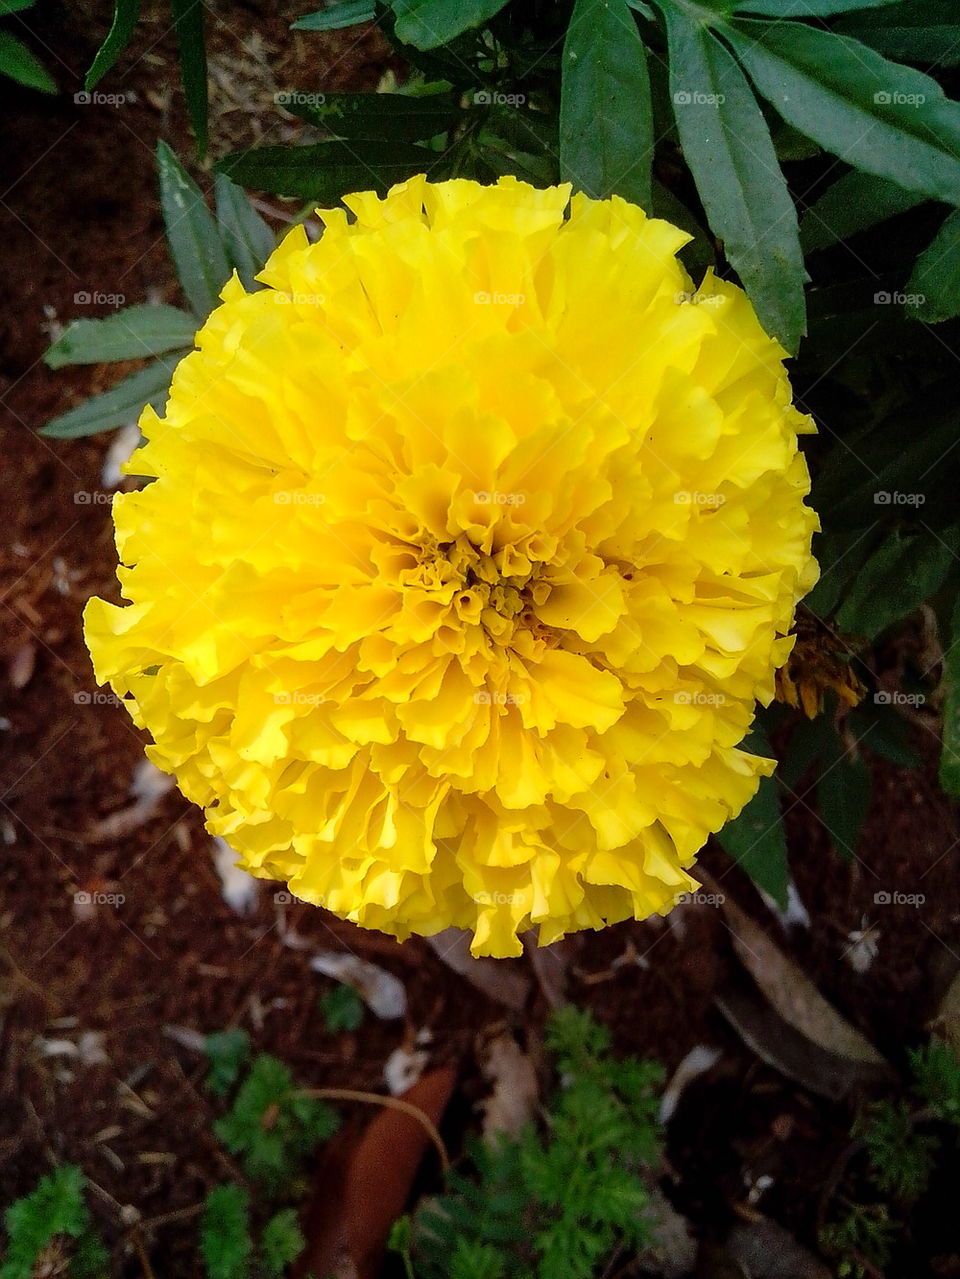  The Chrysanthemum